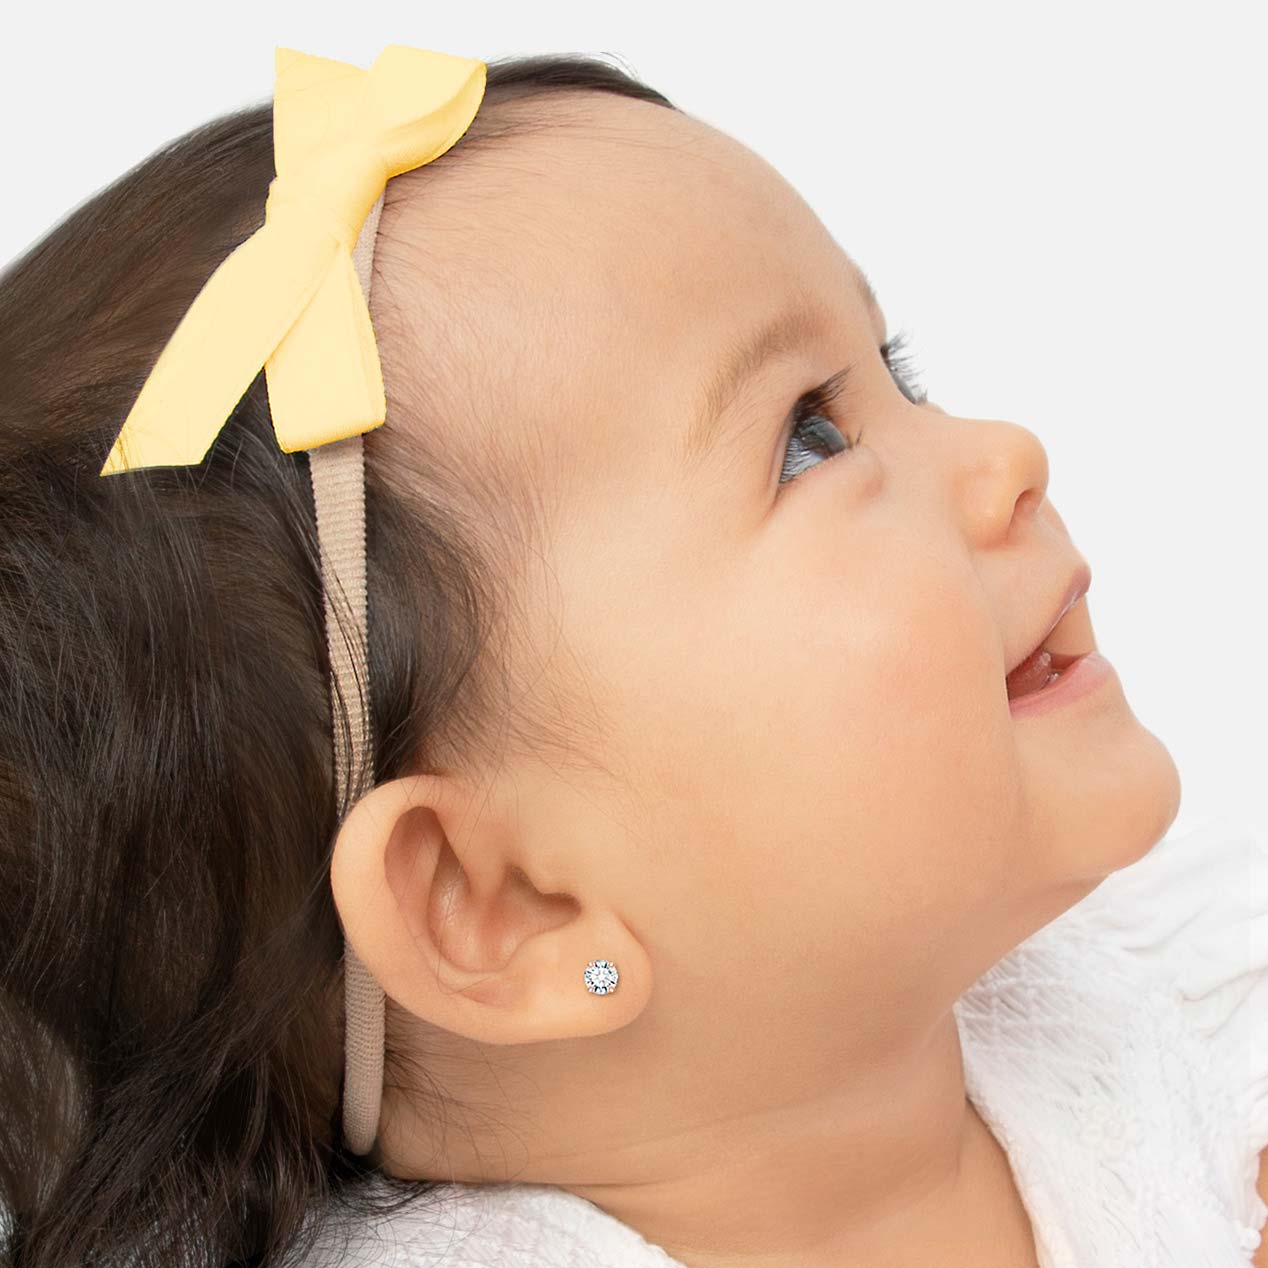 Baby Girl with Cherry Earrings Stock Image - Image of garden, innocent:  40108505